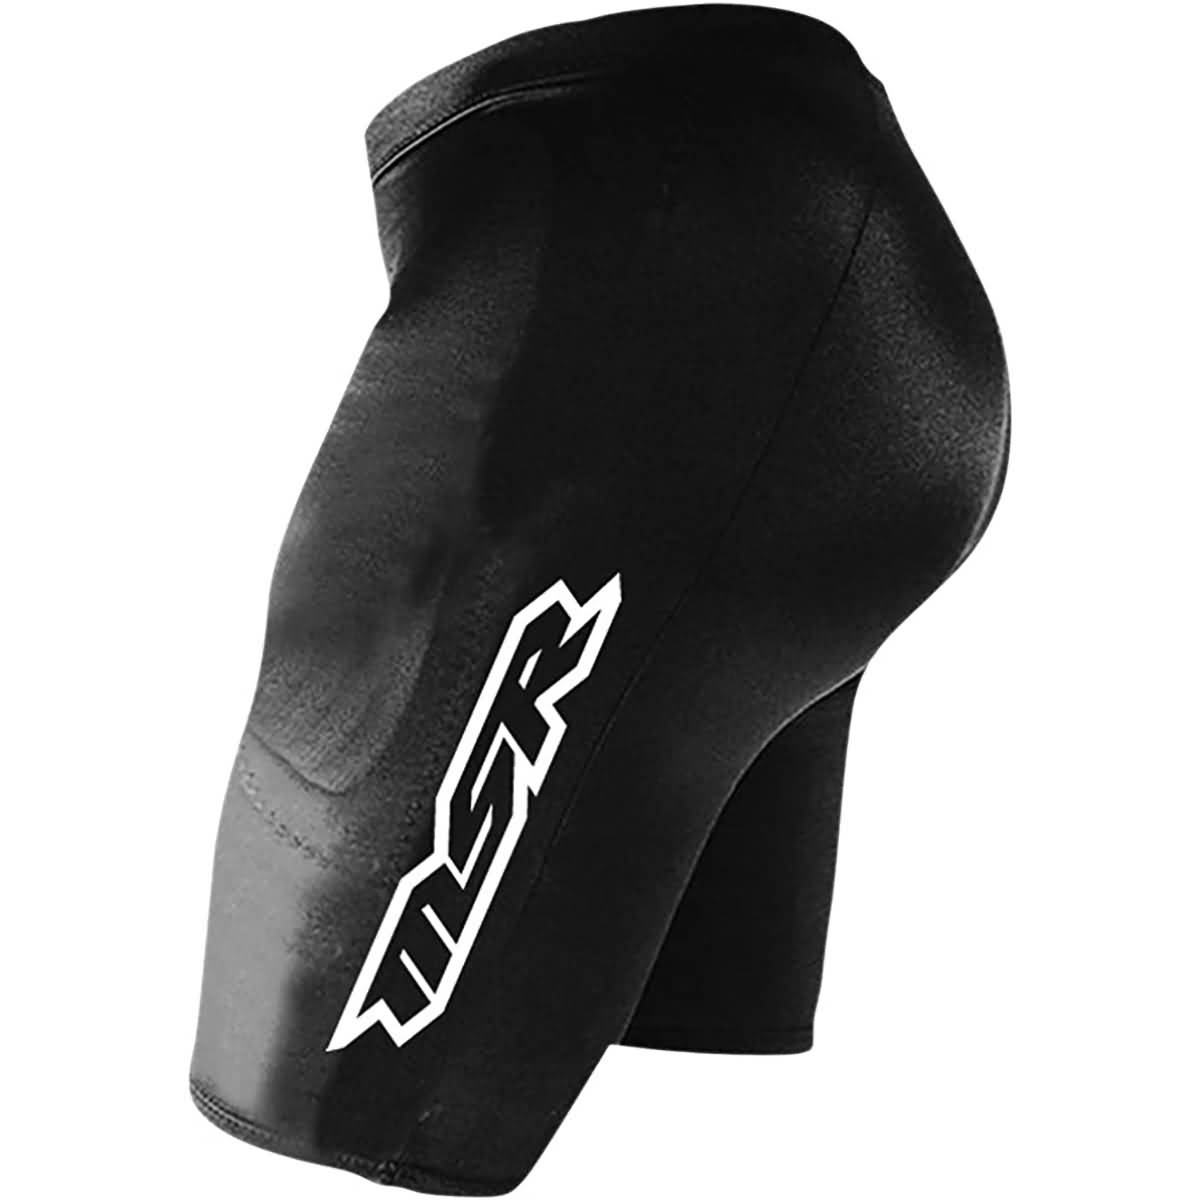 MSR Racing Impact Skins Base Layer Short Men's Off-Road Body Armor-33-0135